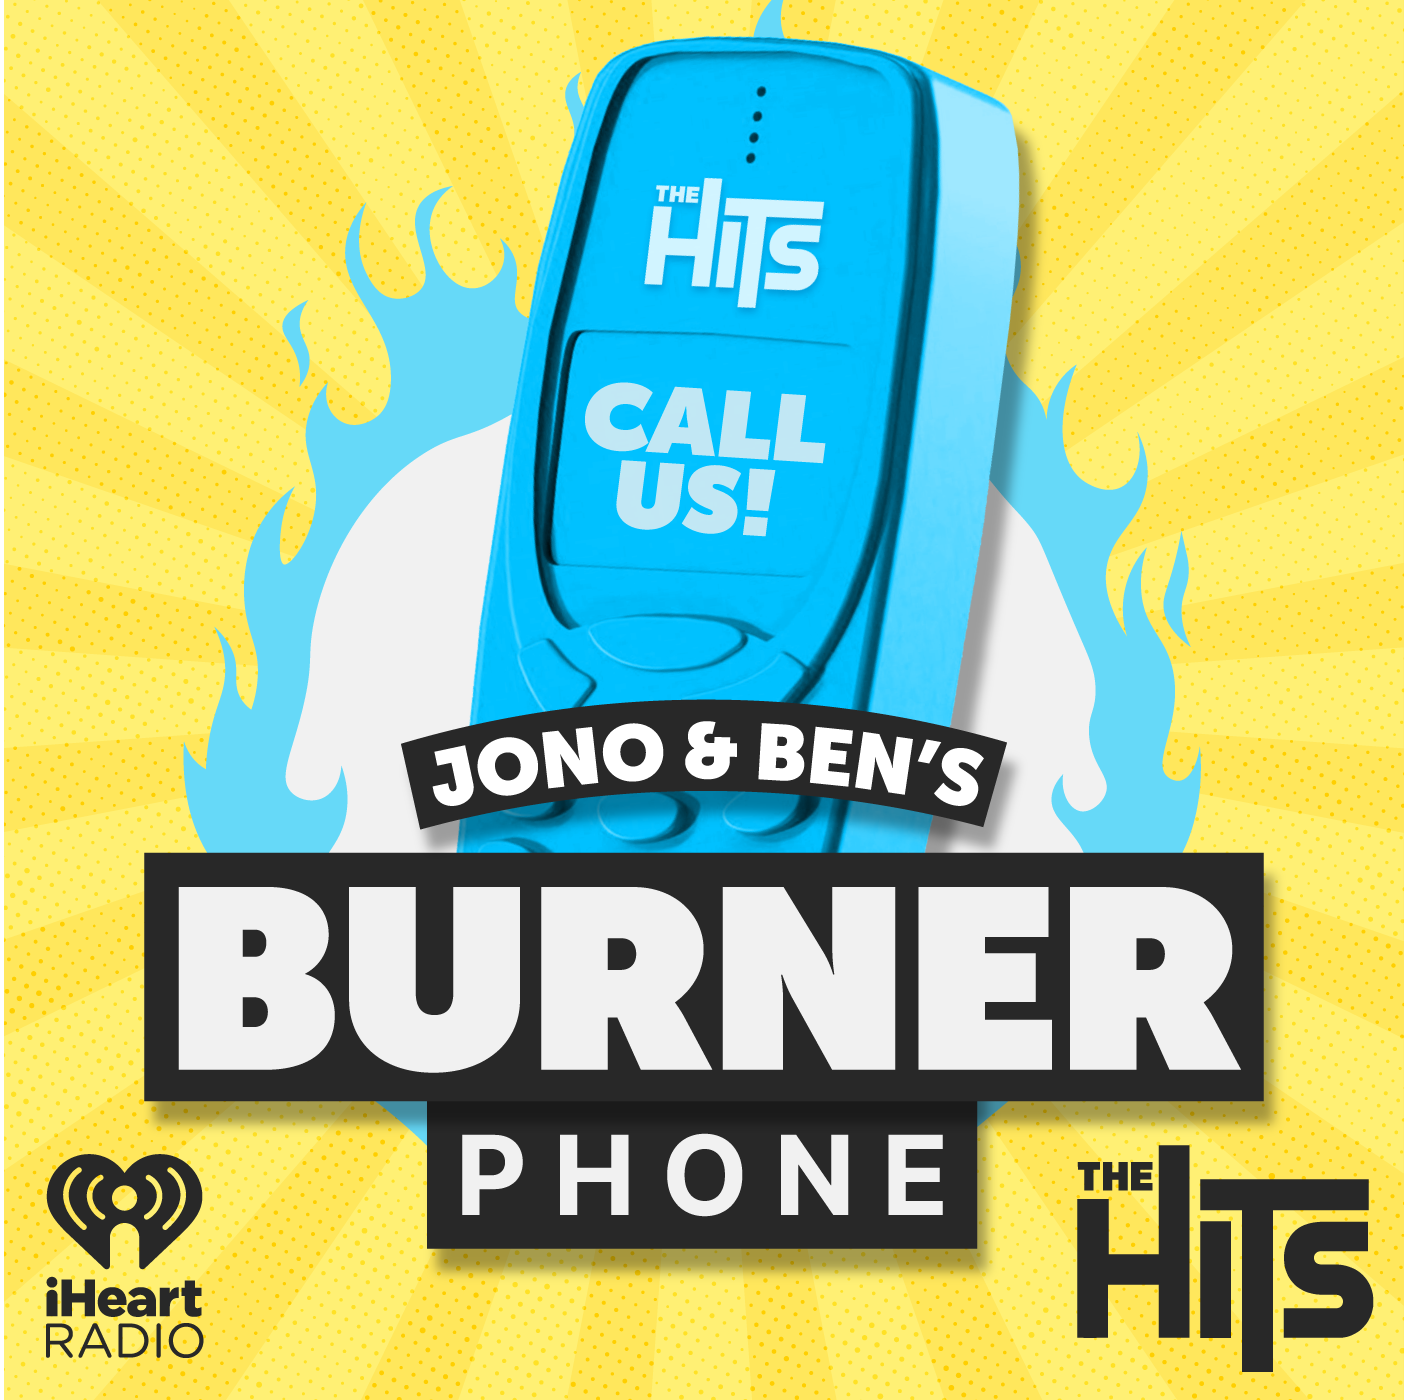 The Burner Phone 39: Mount Rushmore Of New Zealand!